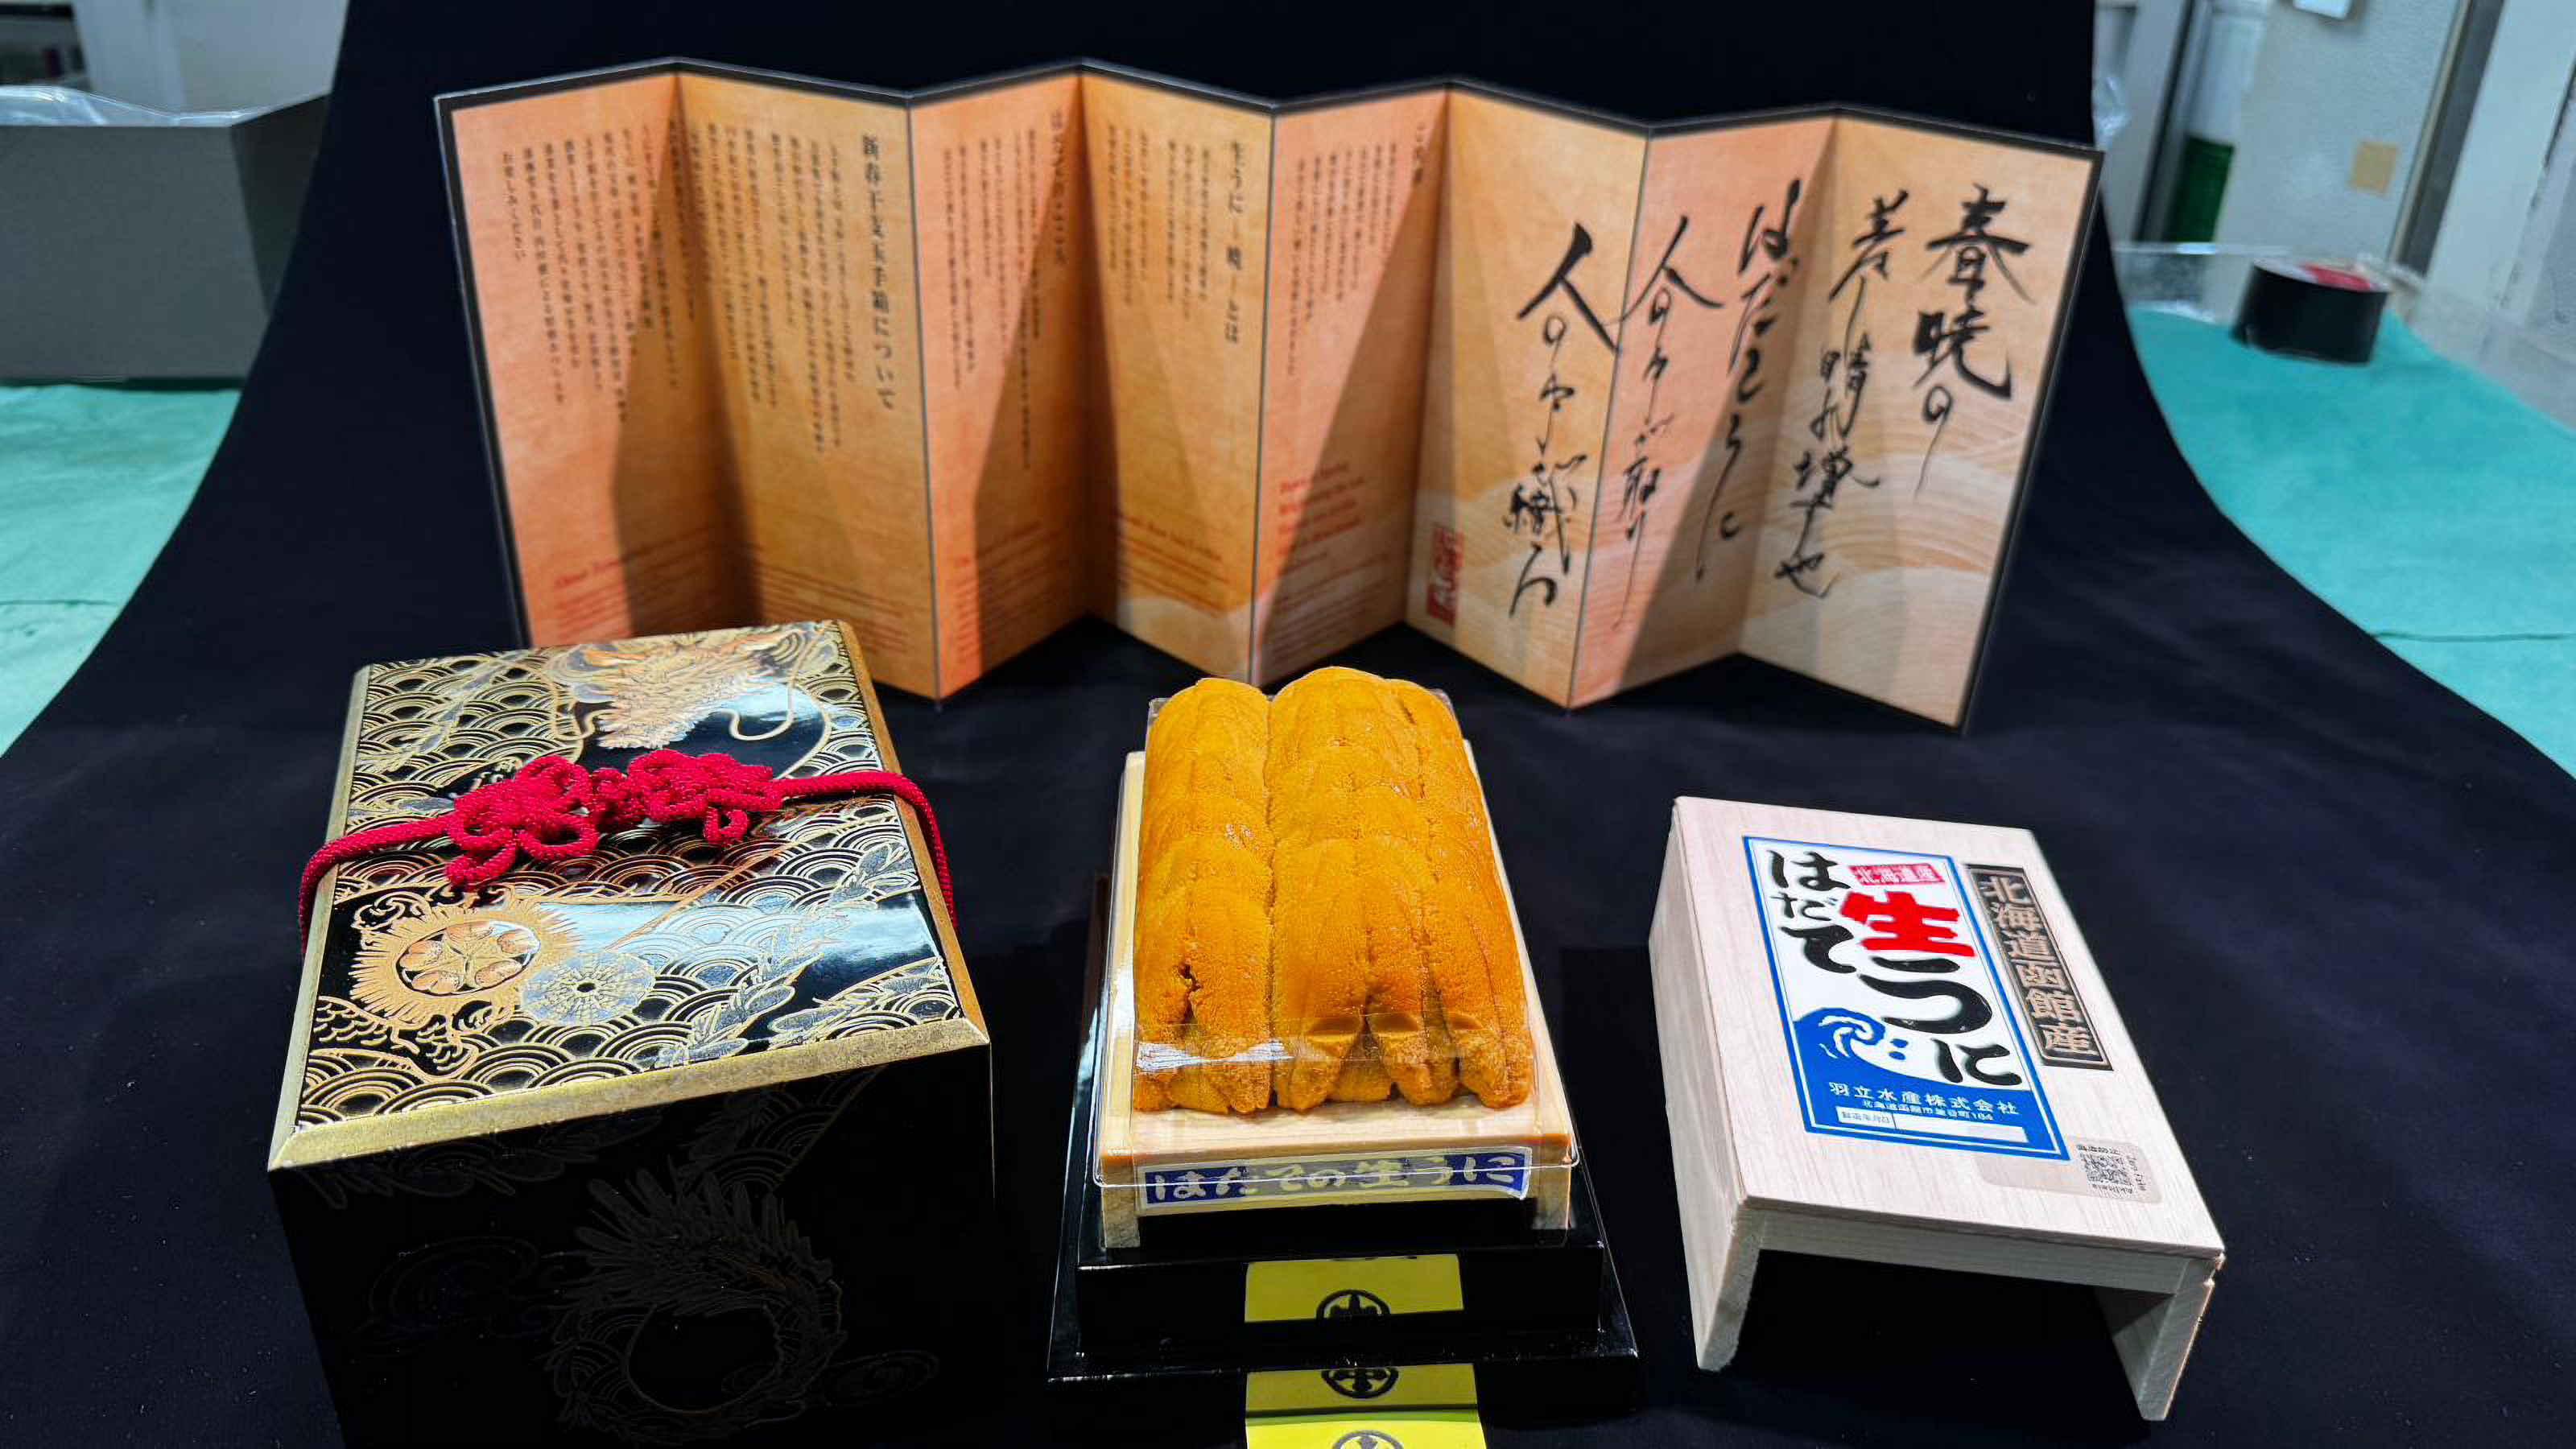 Chef Hiroki of Sushiyoshi Hong Kong has won Japan’s first New Year uni auction, paying JPY1,500,000 for a rare box of the prized highest grade Hadate Kita Murasaki Sea Urchin from Hokkaido.